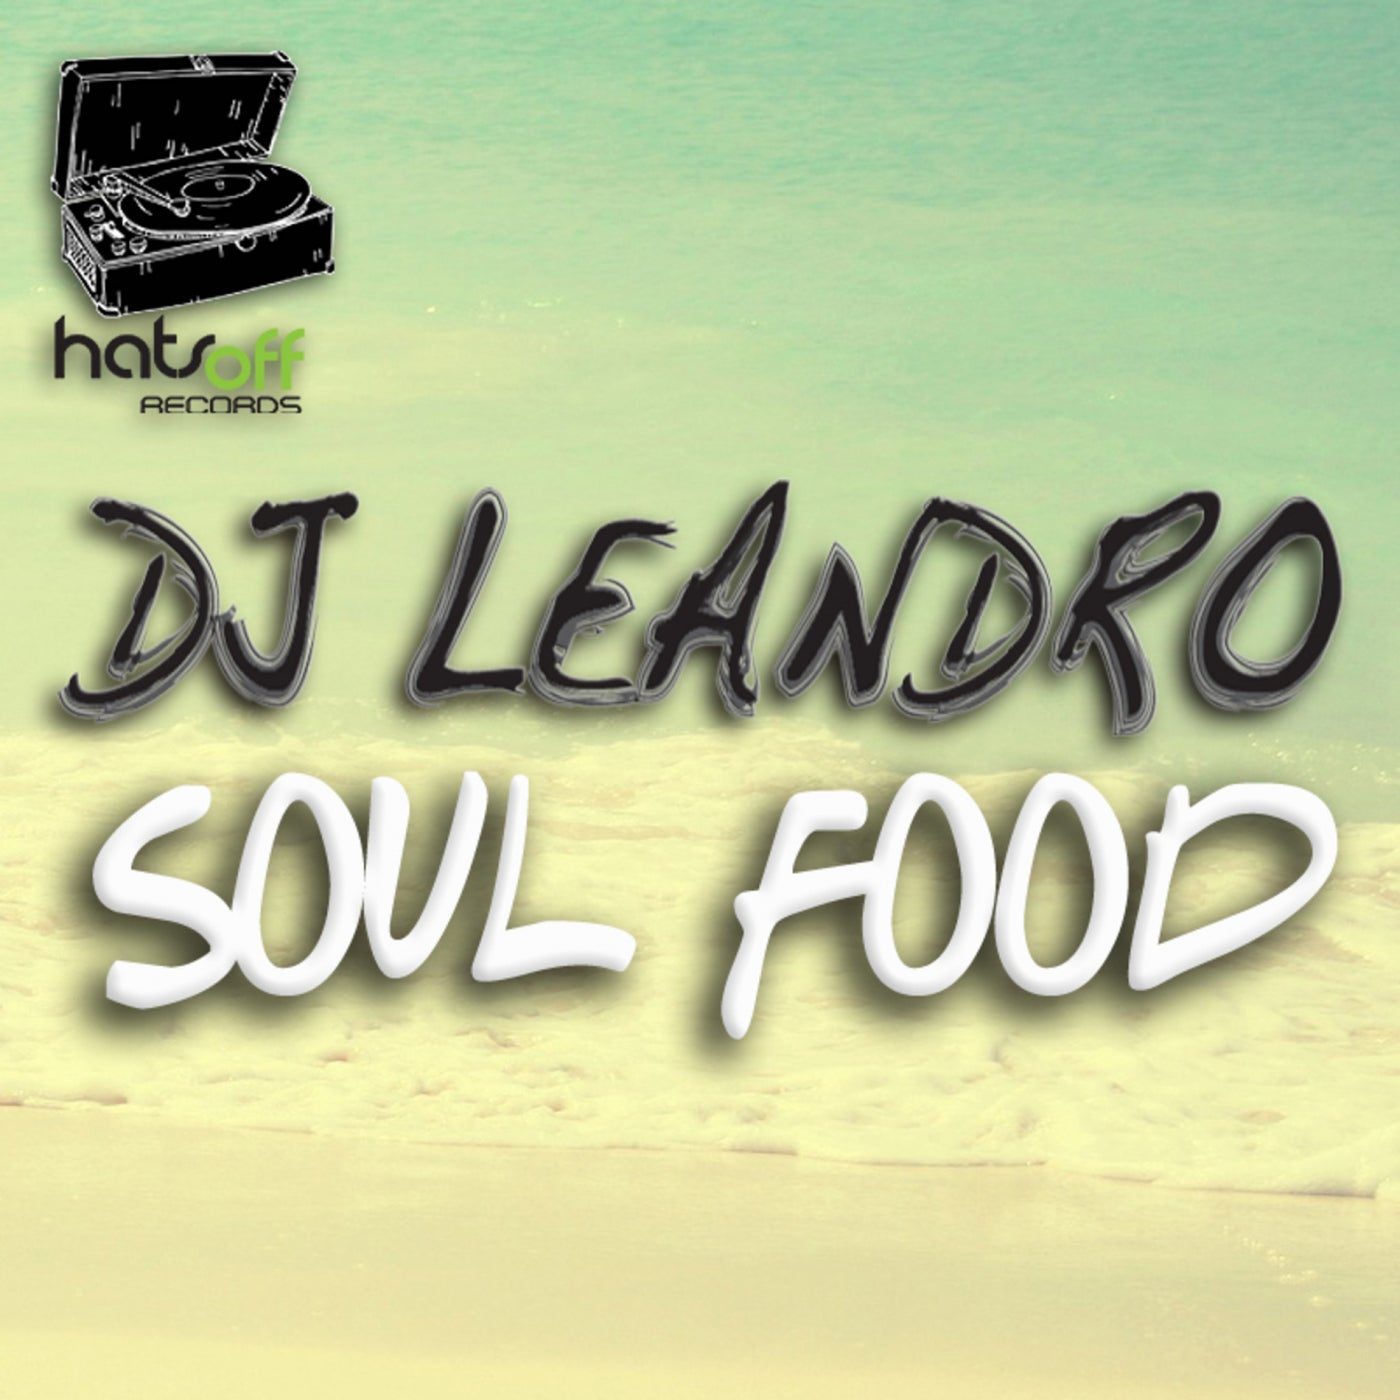 DJ Leandro - Soul Food [Hats Off Records]